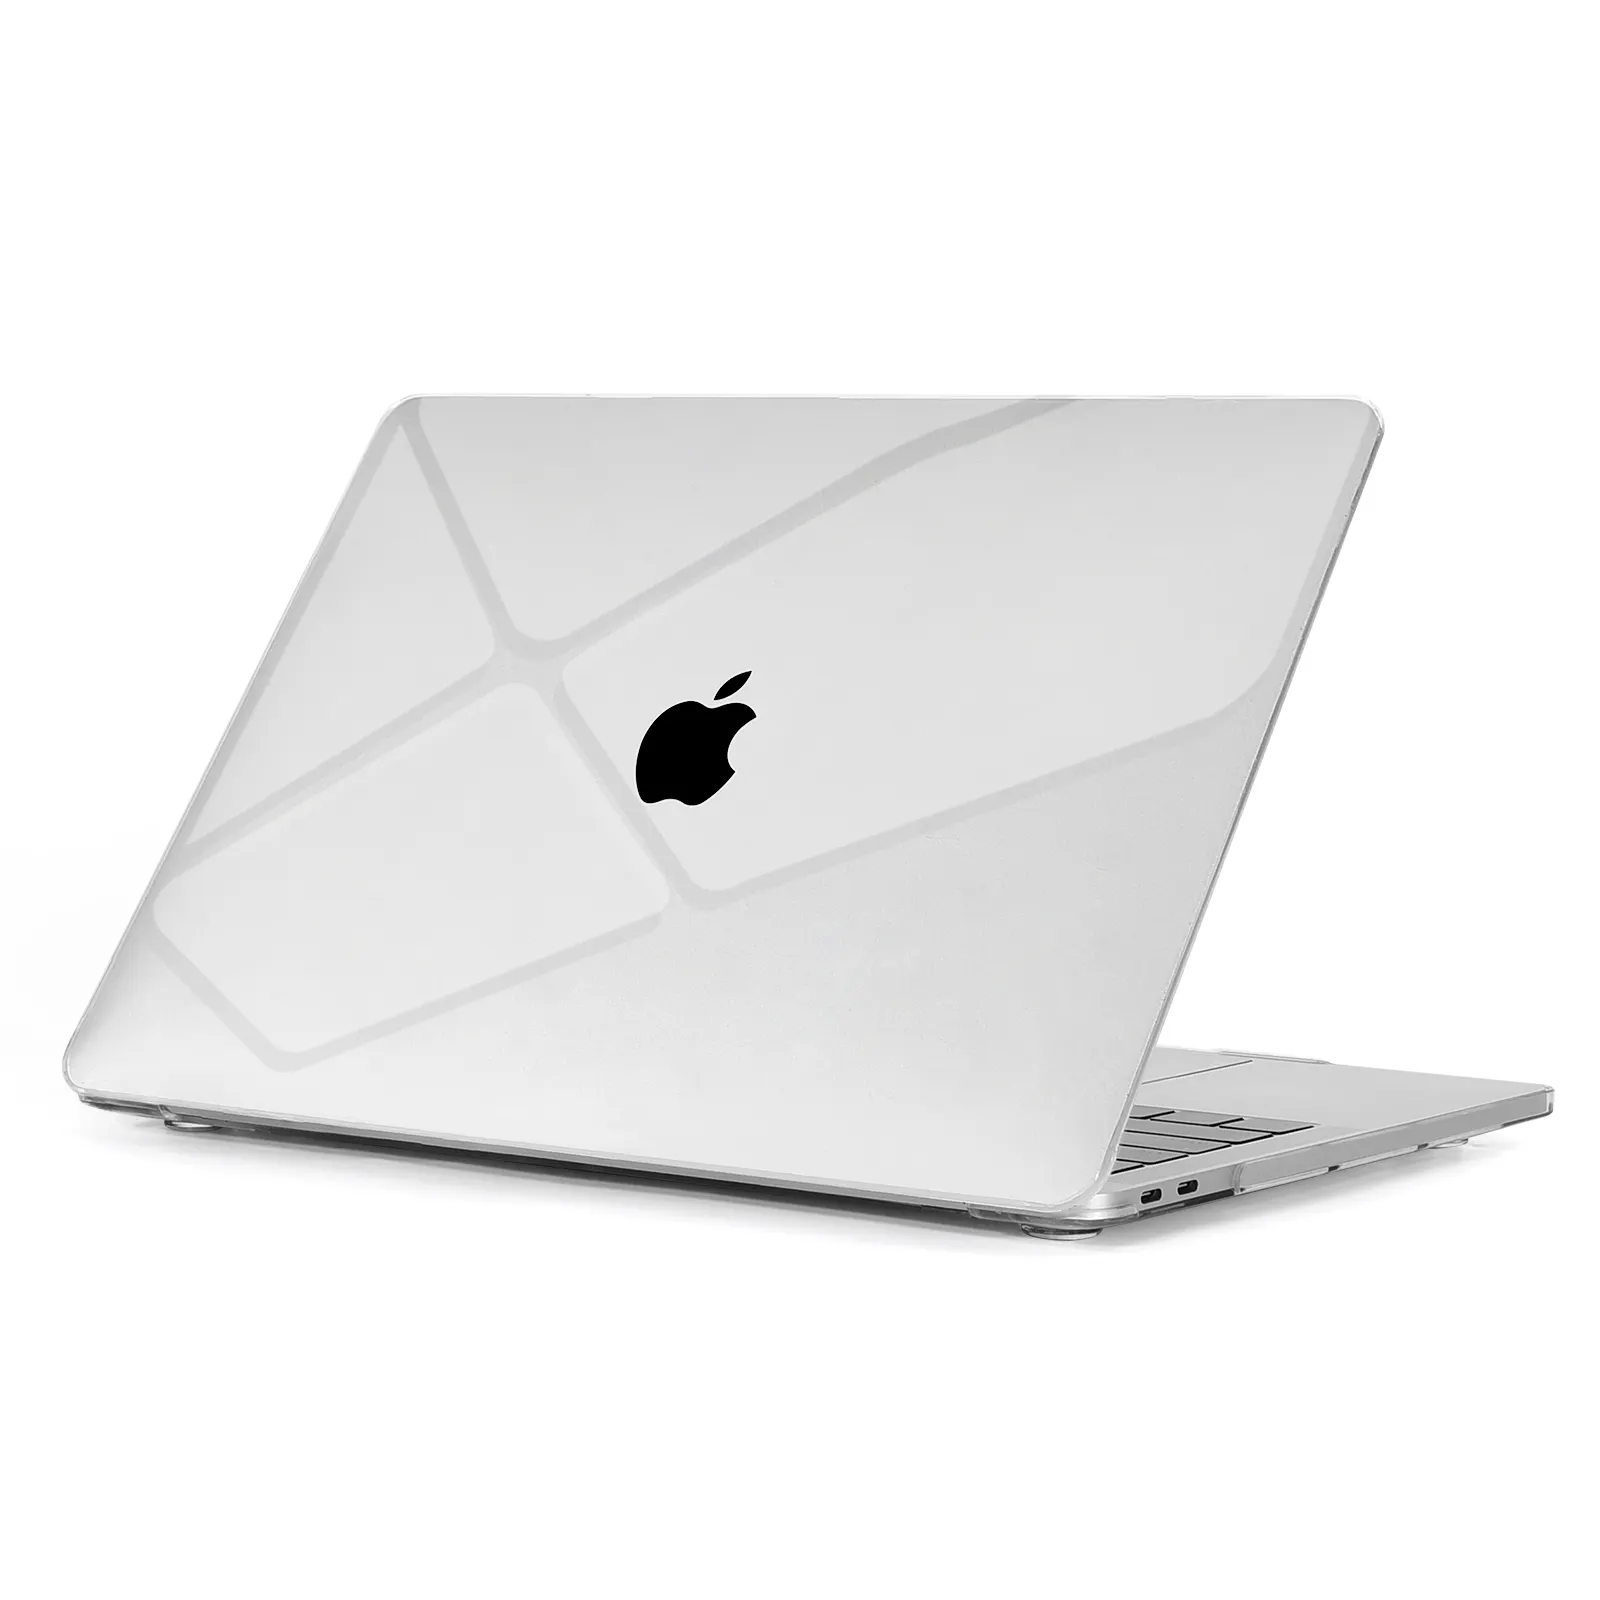 Casing Laptop Kristal lembut untuk Apple Macbook Air M2, casing komputer Laptop Macbook Pro 13 inci transparan Model A2337